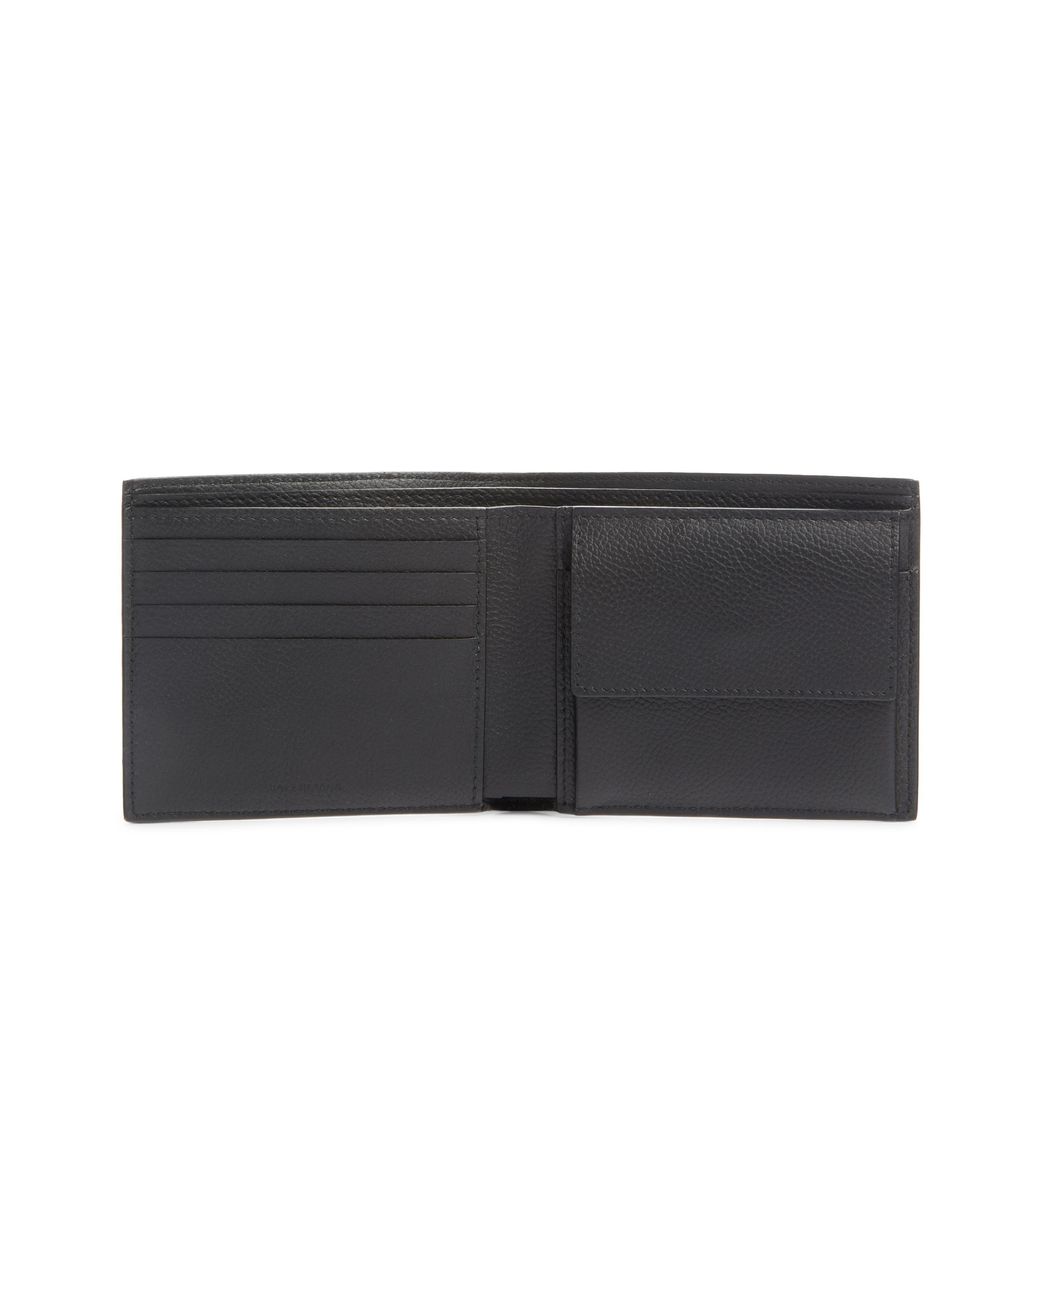 Balenciaga Cash Leather Wallet in Black for Men Lyst